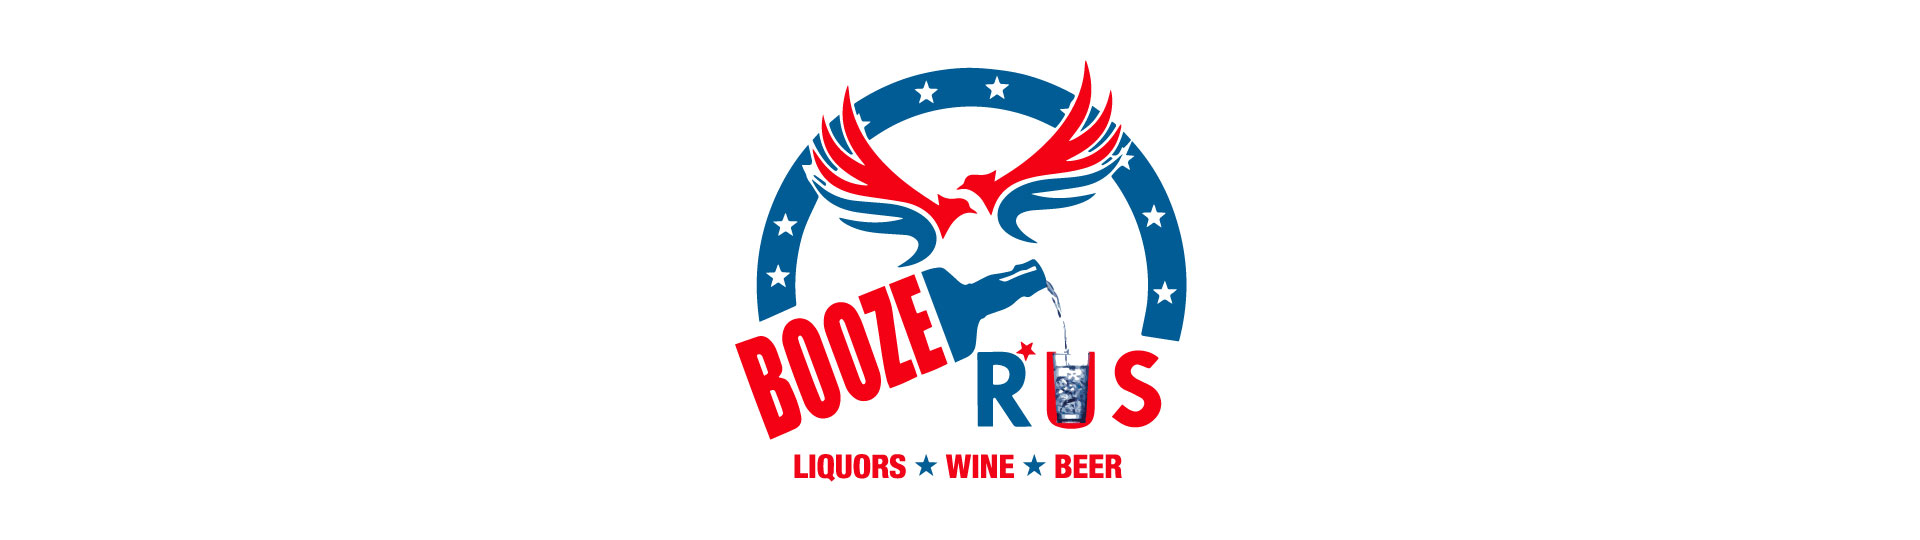 Booze R Us